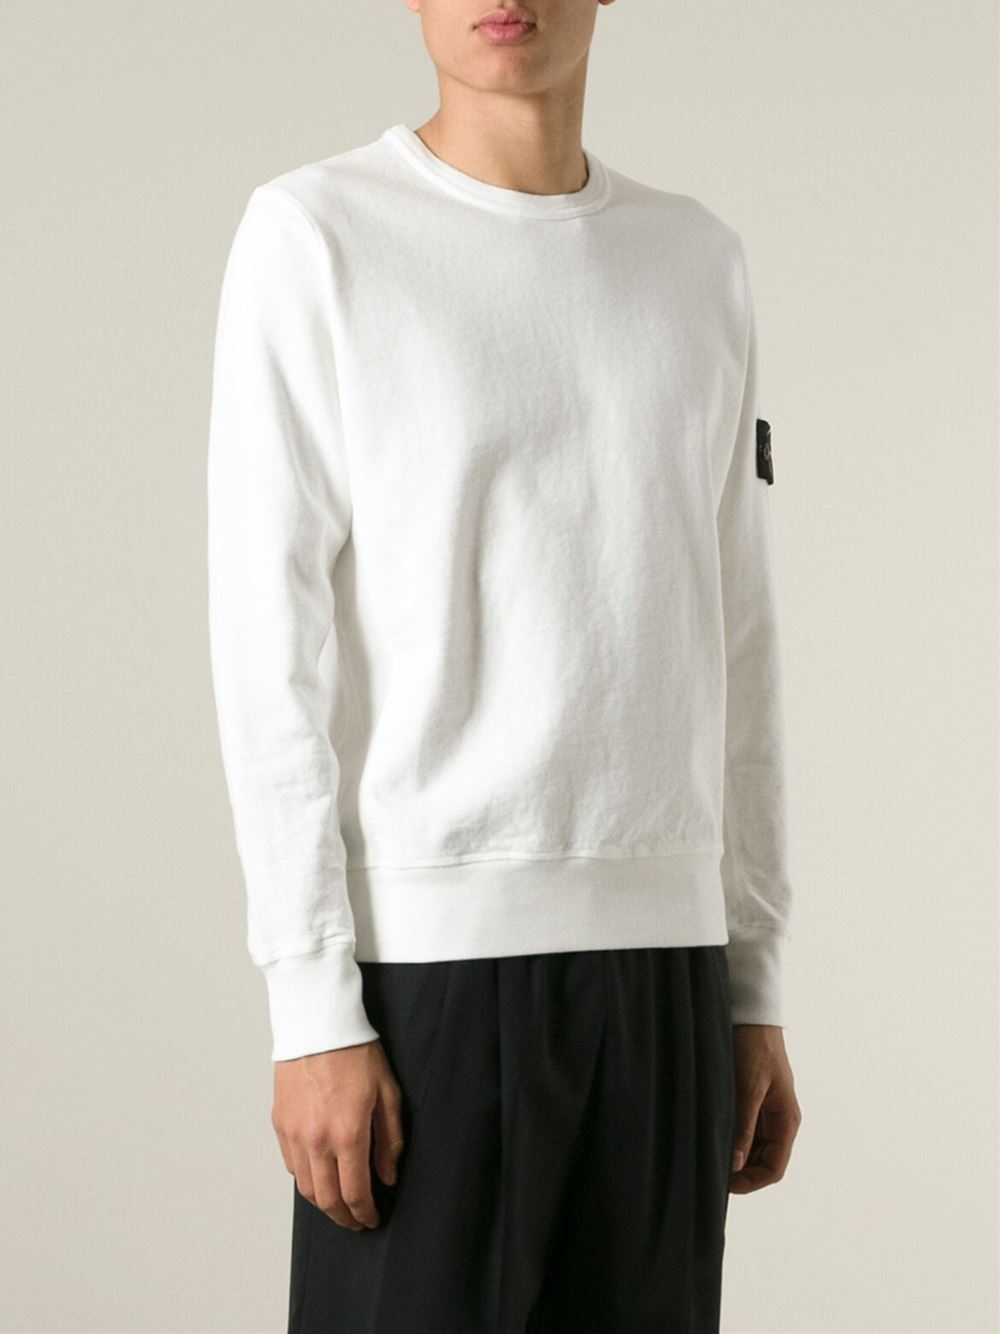 Stone Island Crew Neck Sweatshirt in White for Men | Lyst